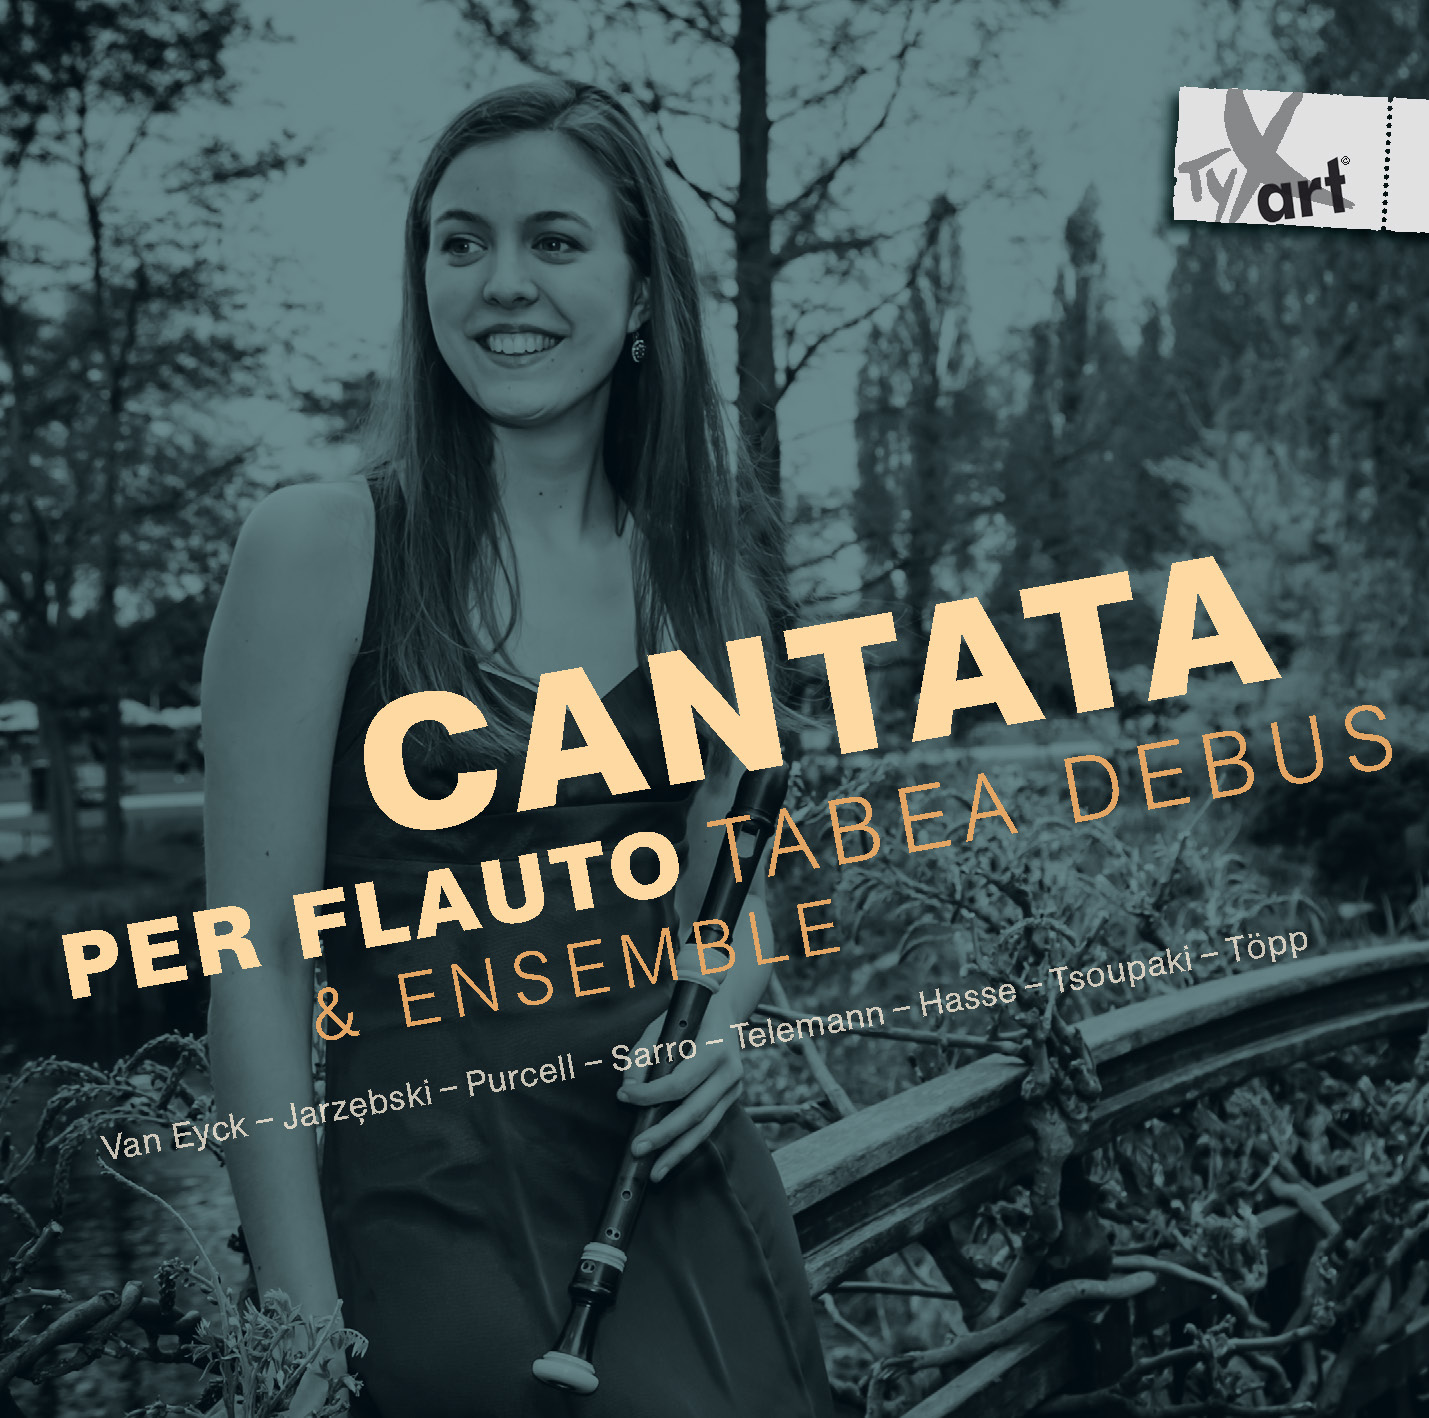 Cantata per Flauto - Tabea Debus & Ensemble